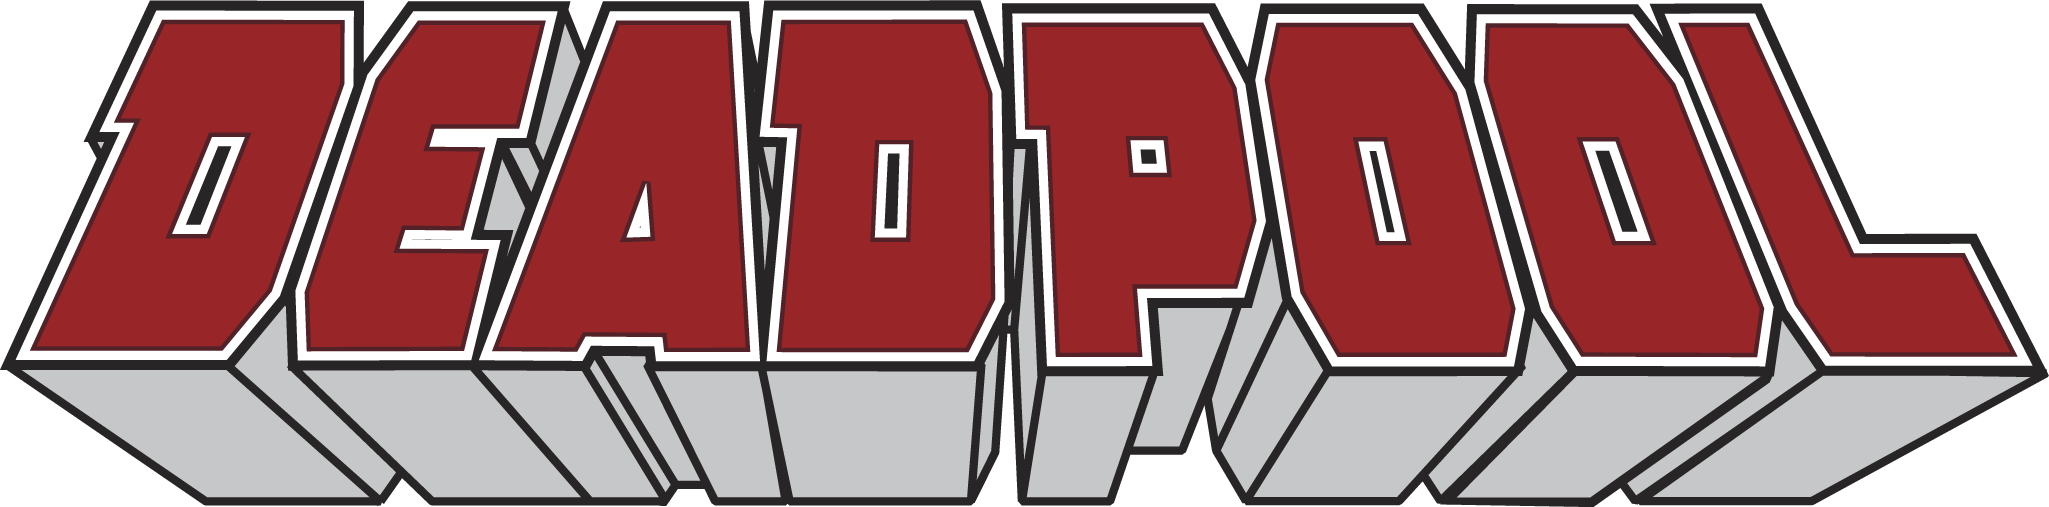 Official Deadpool Logo PNG Image Background